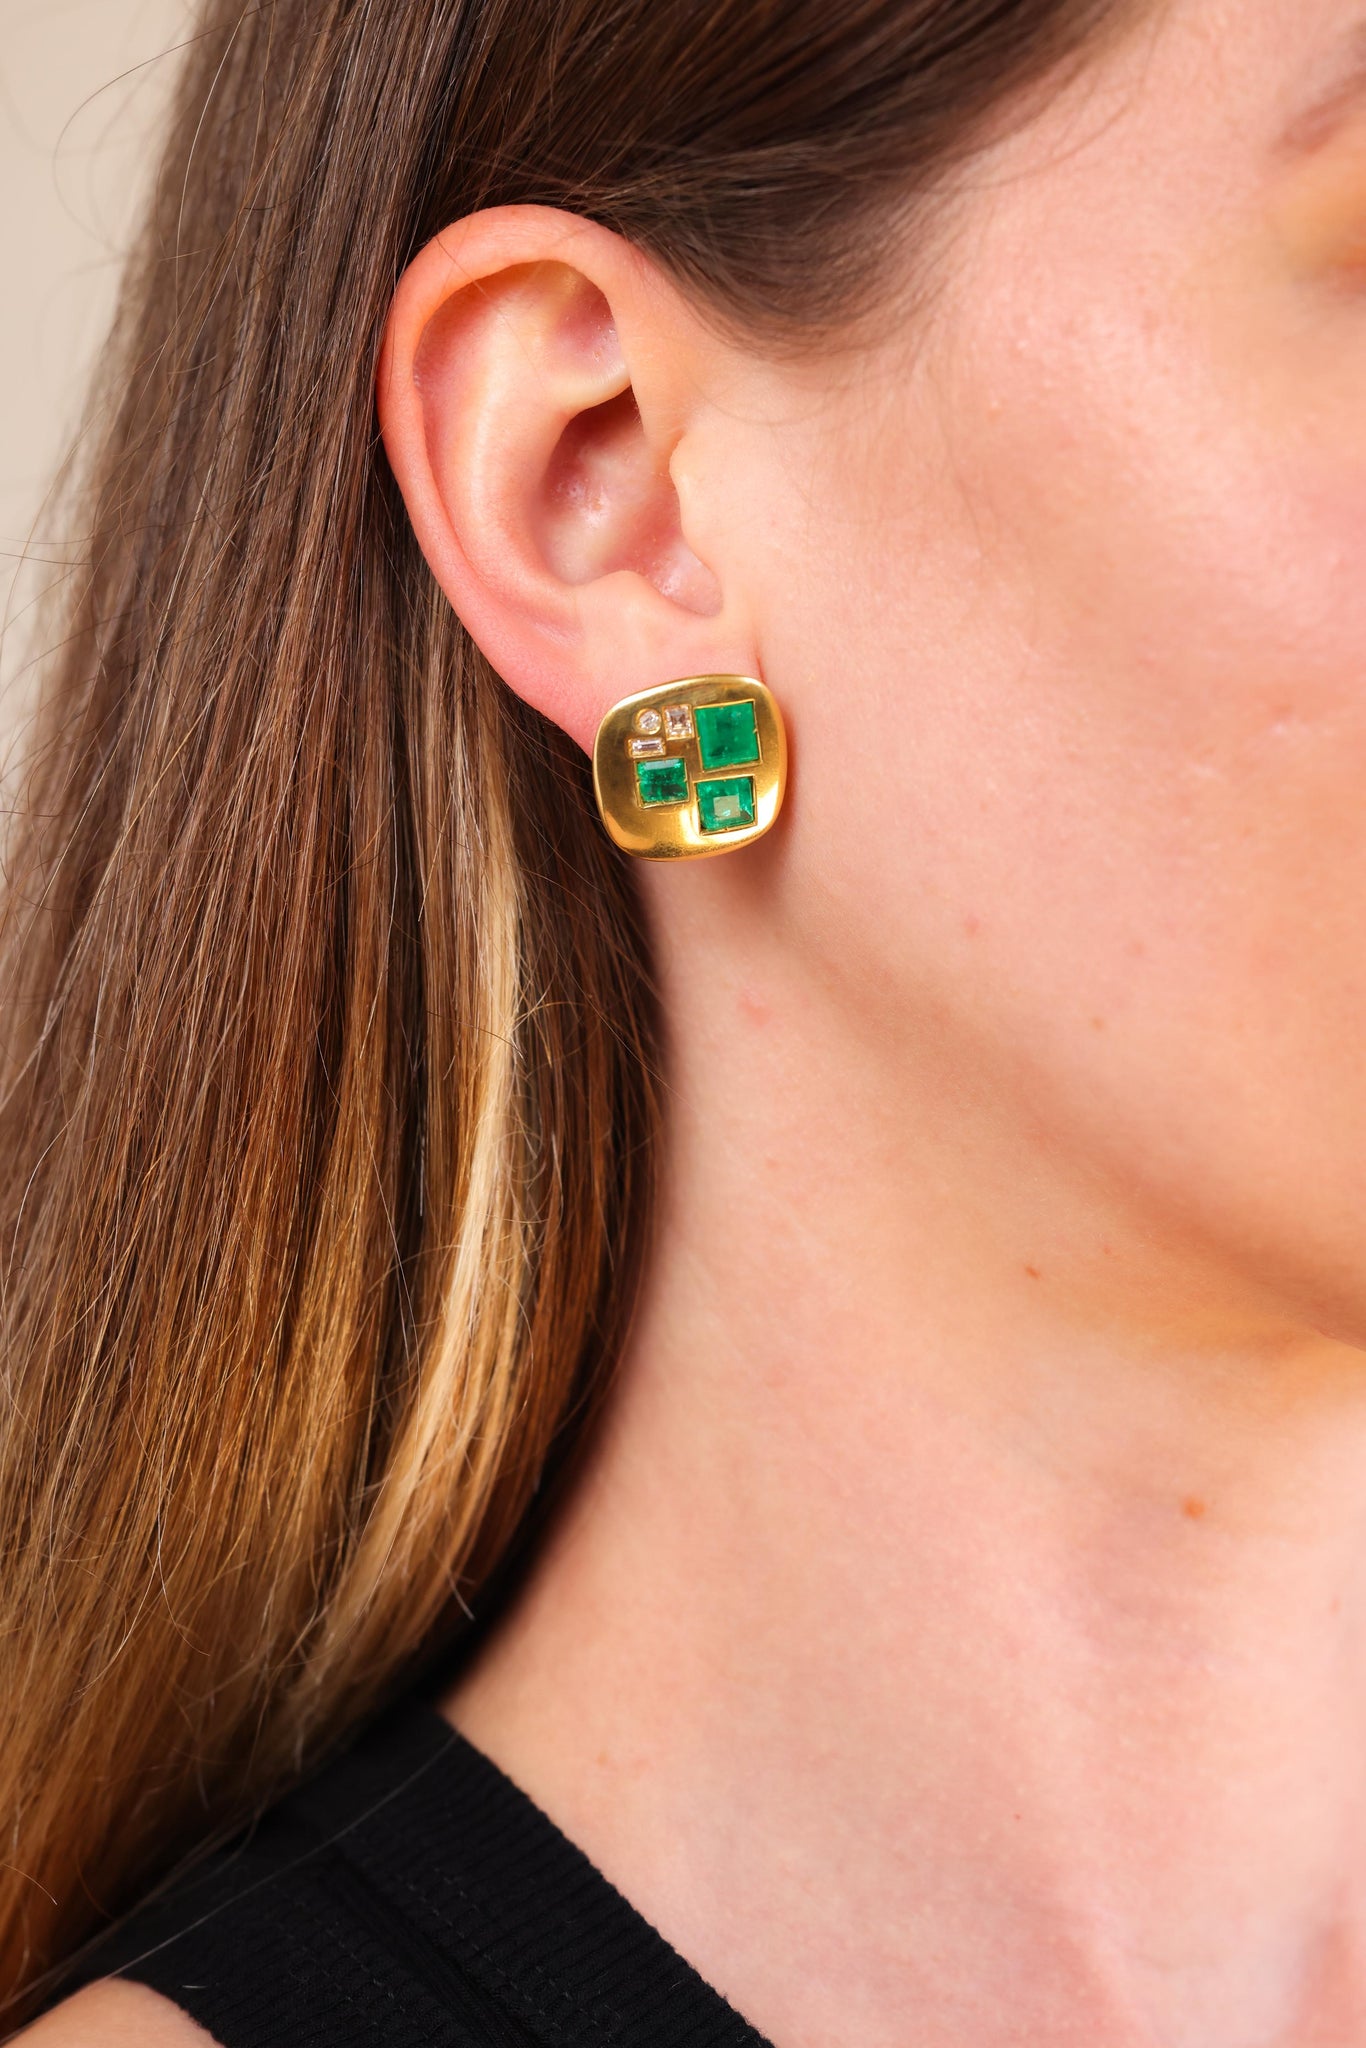 Emerald Diamond Yellow Gold Earrings